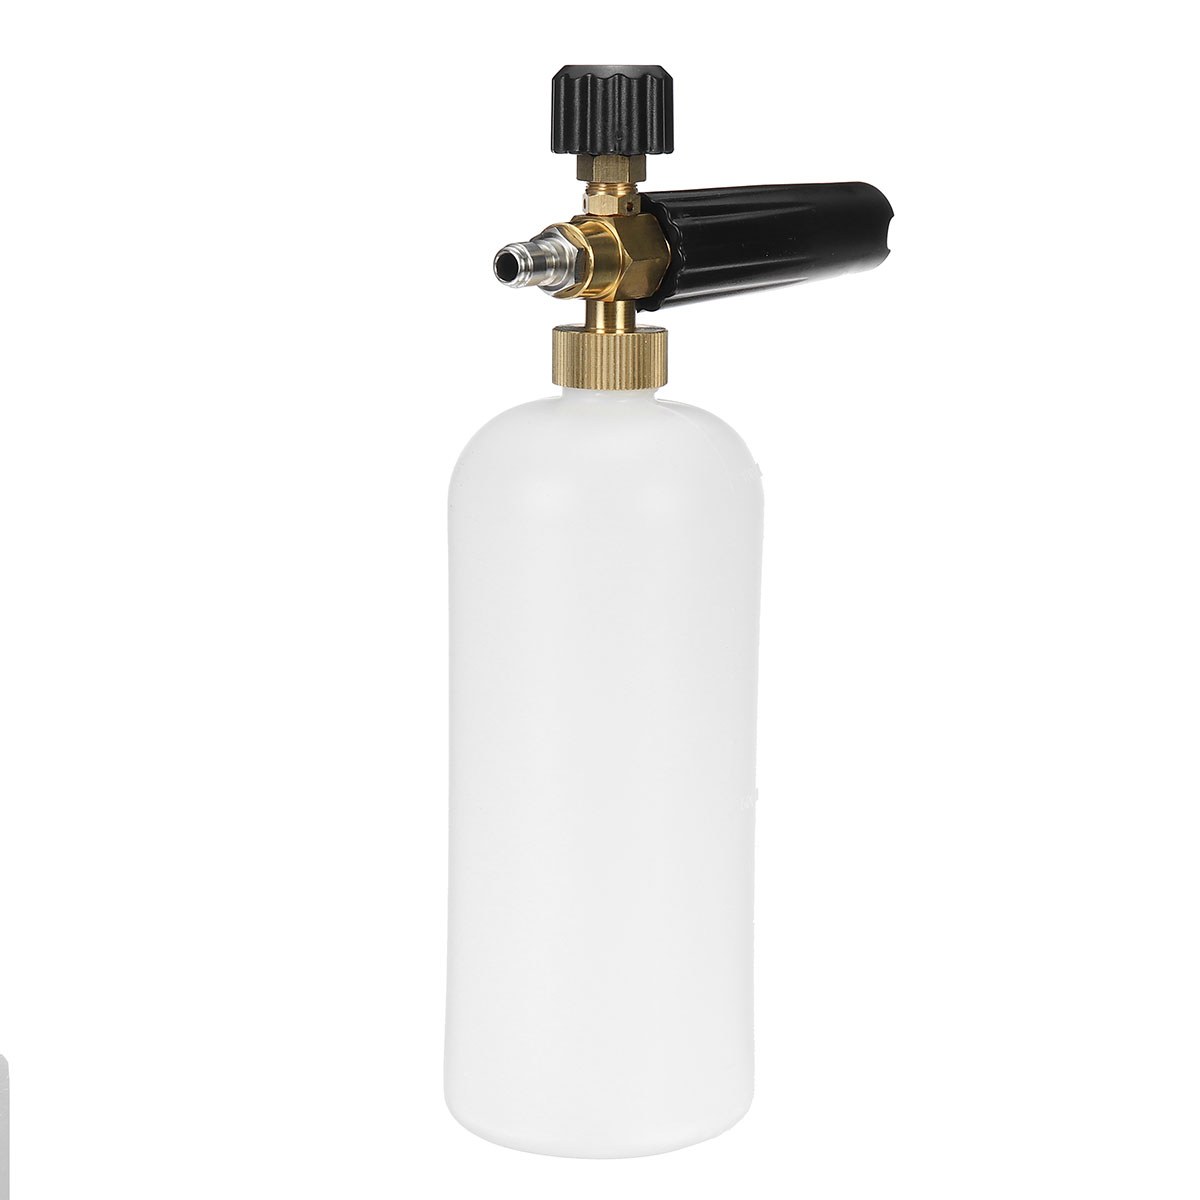 Adjustable-Snow-Foam-Lance-Sprayer-Washer-Soap-Bottle-Car-Pressure-Washer-1L-1662575-2